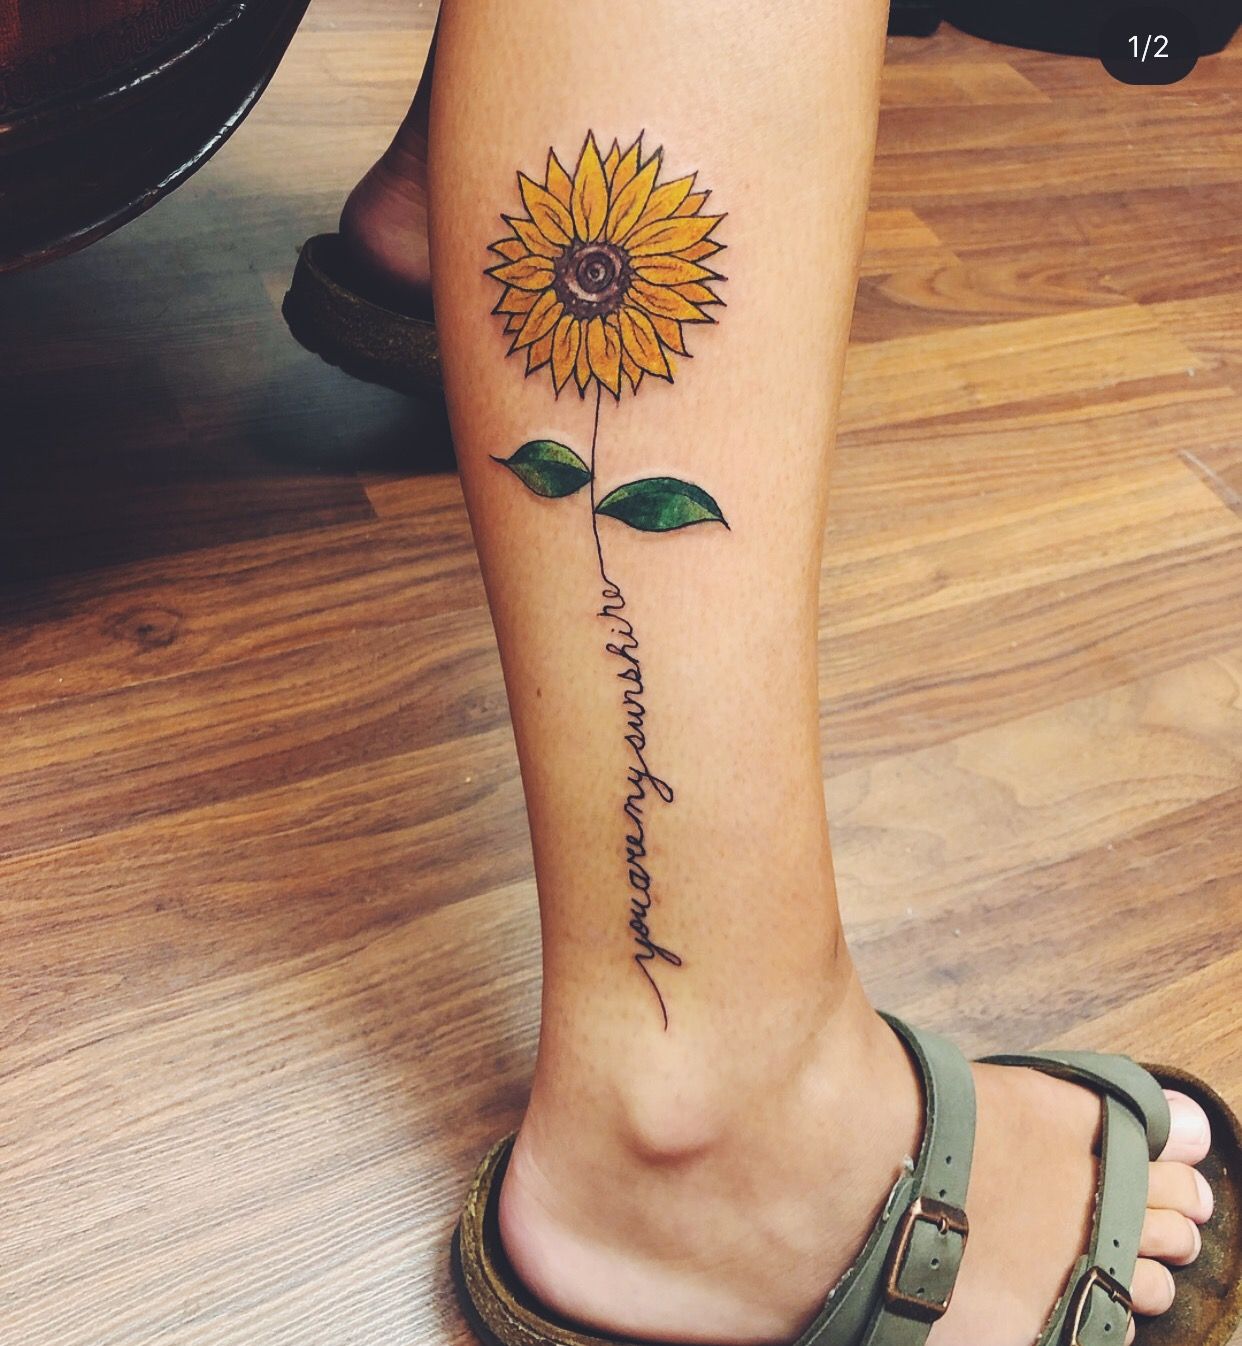 Wonderful you are my sunshine tattoo.